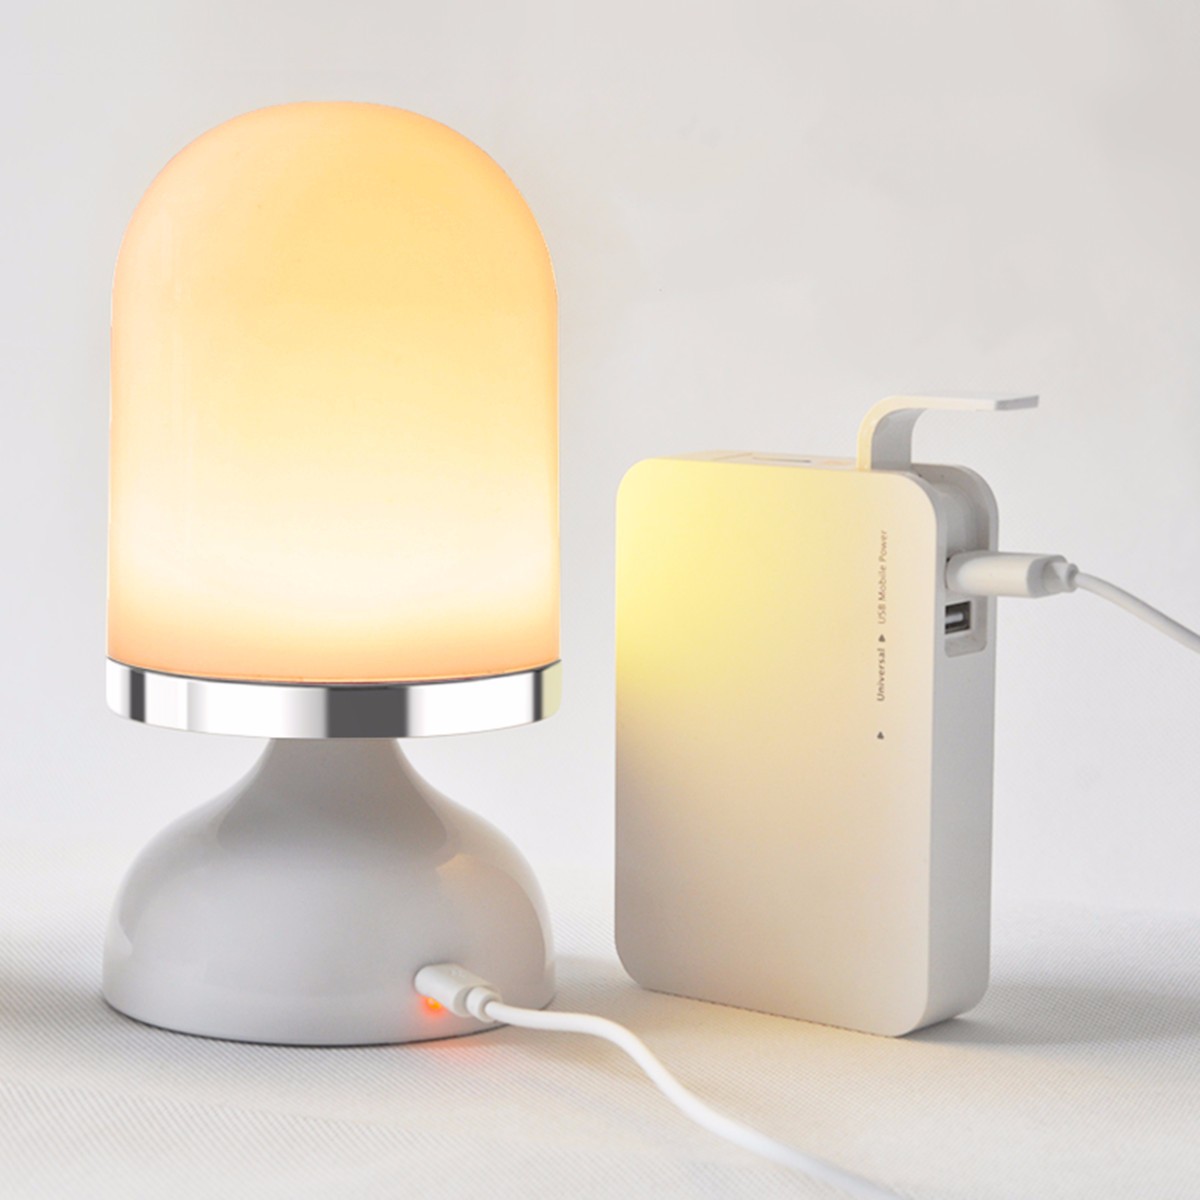 Portable-USB-Rechargeable-LED-Night-Light-Hanging-Stand-Table-Vibration-Sensor-Lamp-1085102-6